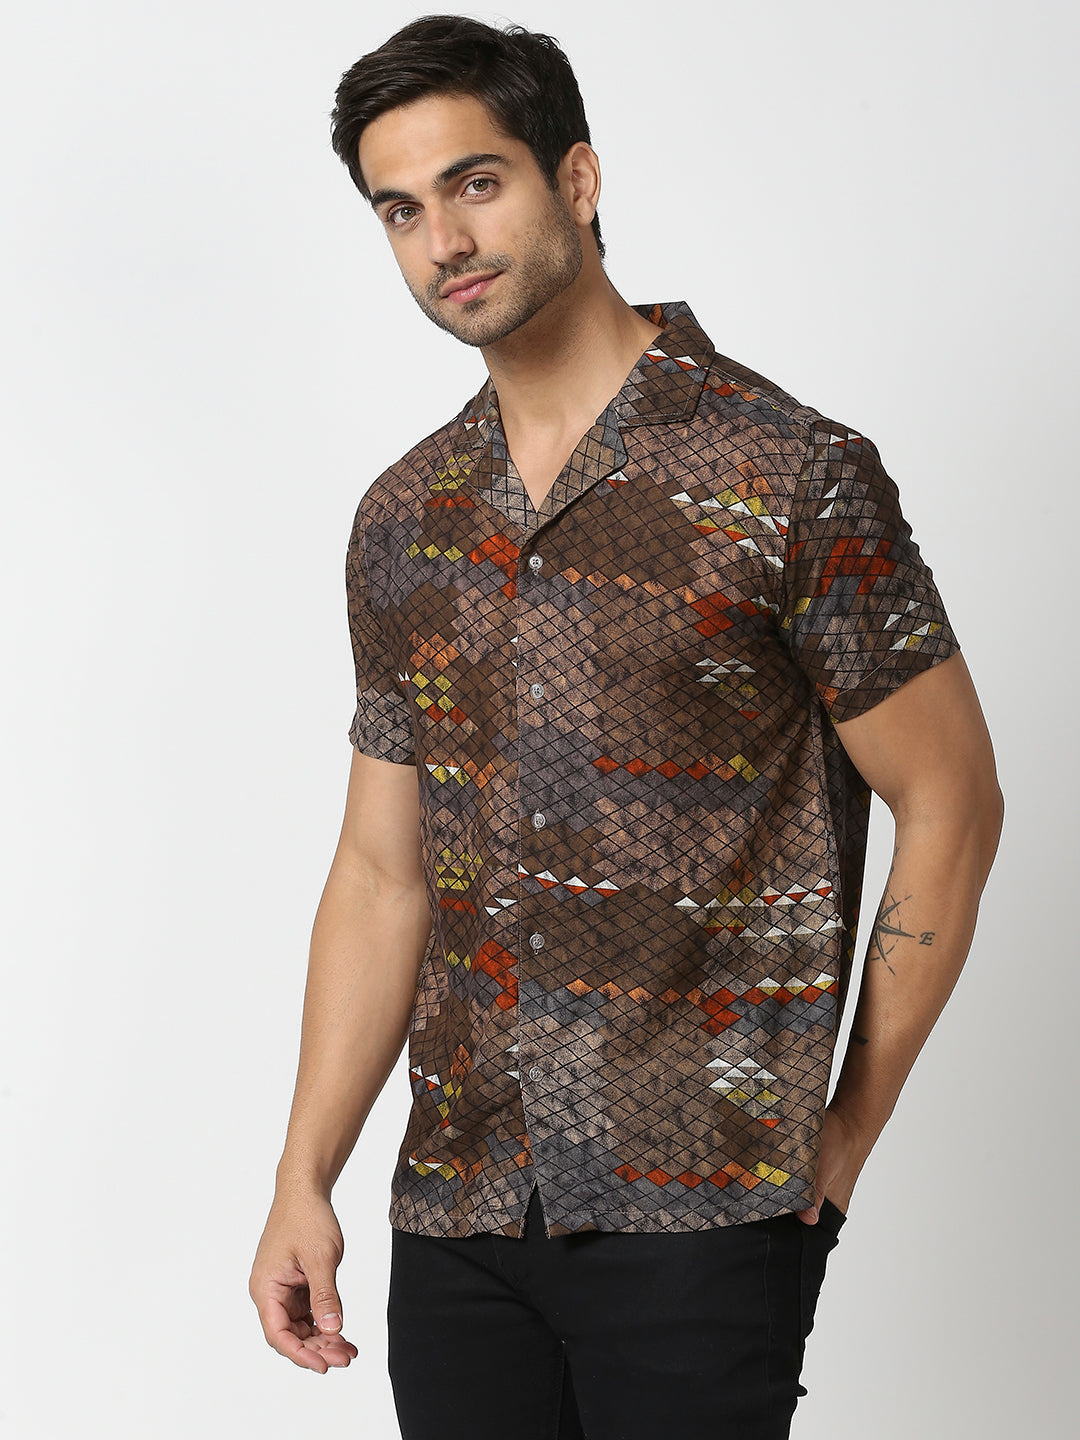 Cubist Dark Brown Abstract Shirt